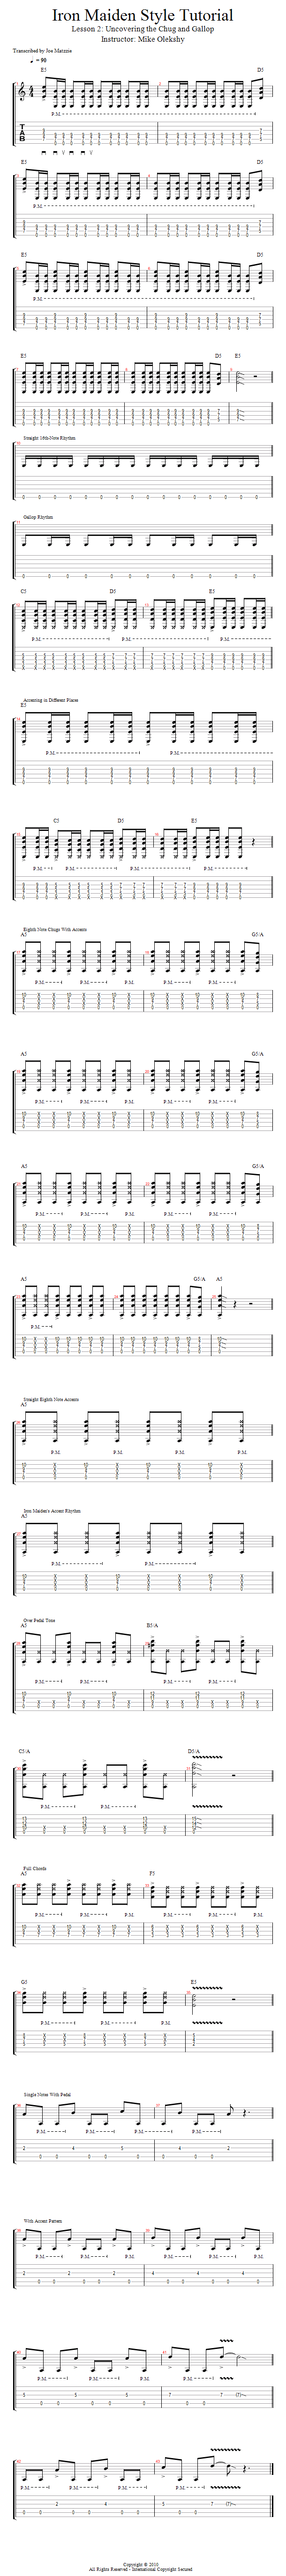 Chug and Gallop song notation